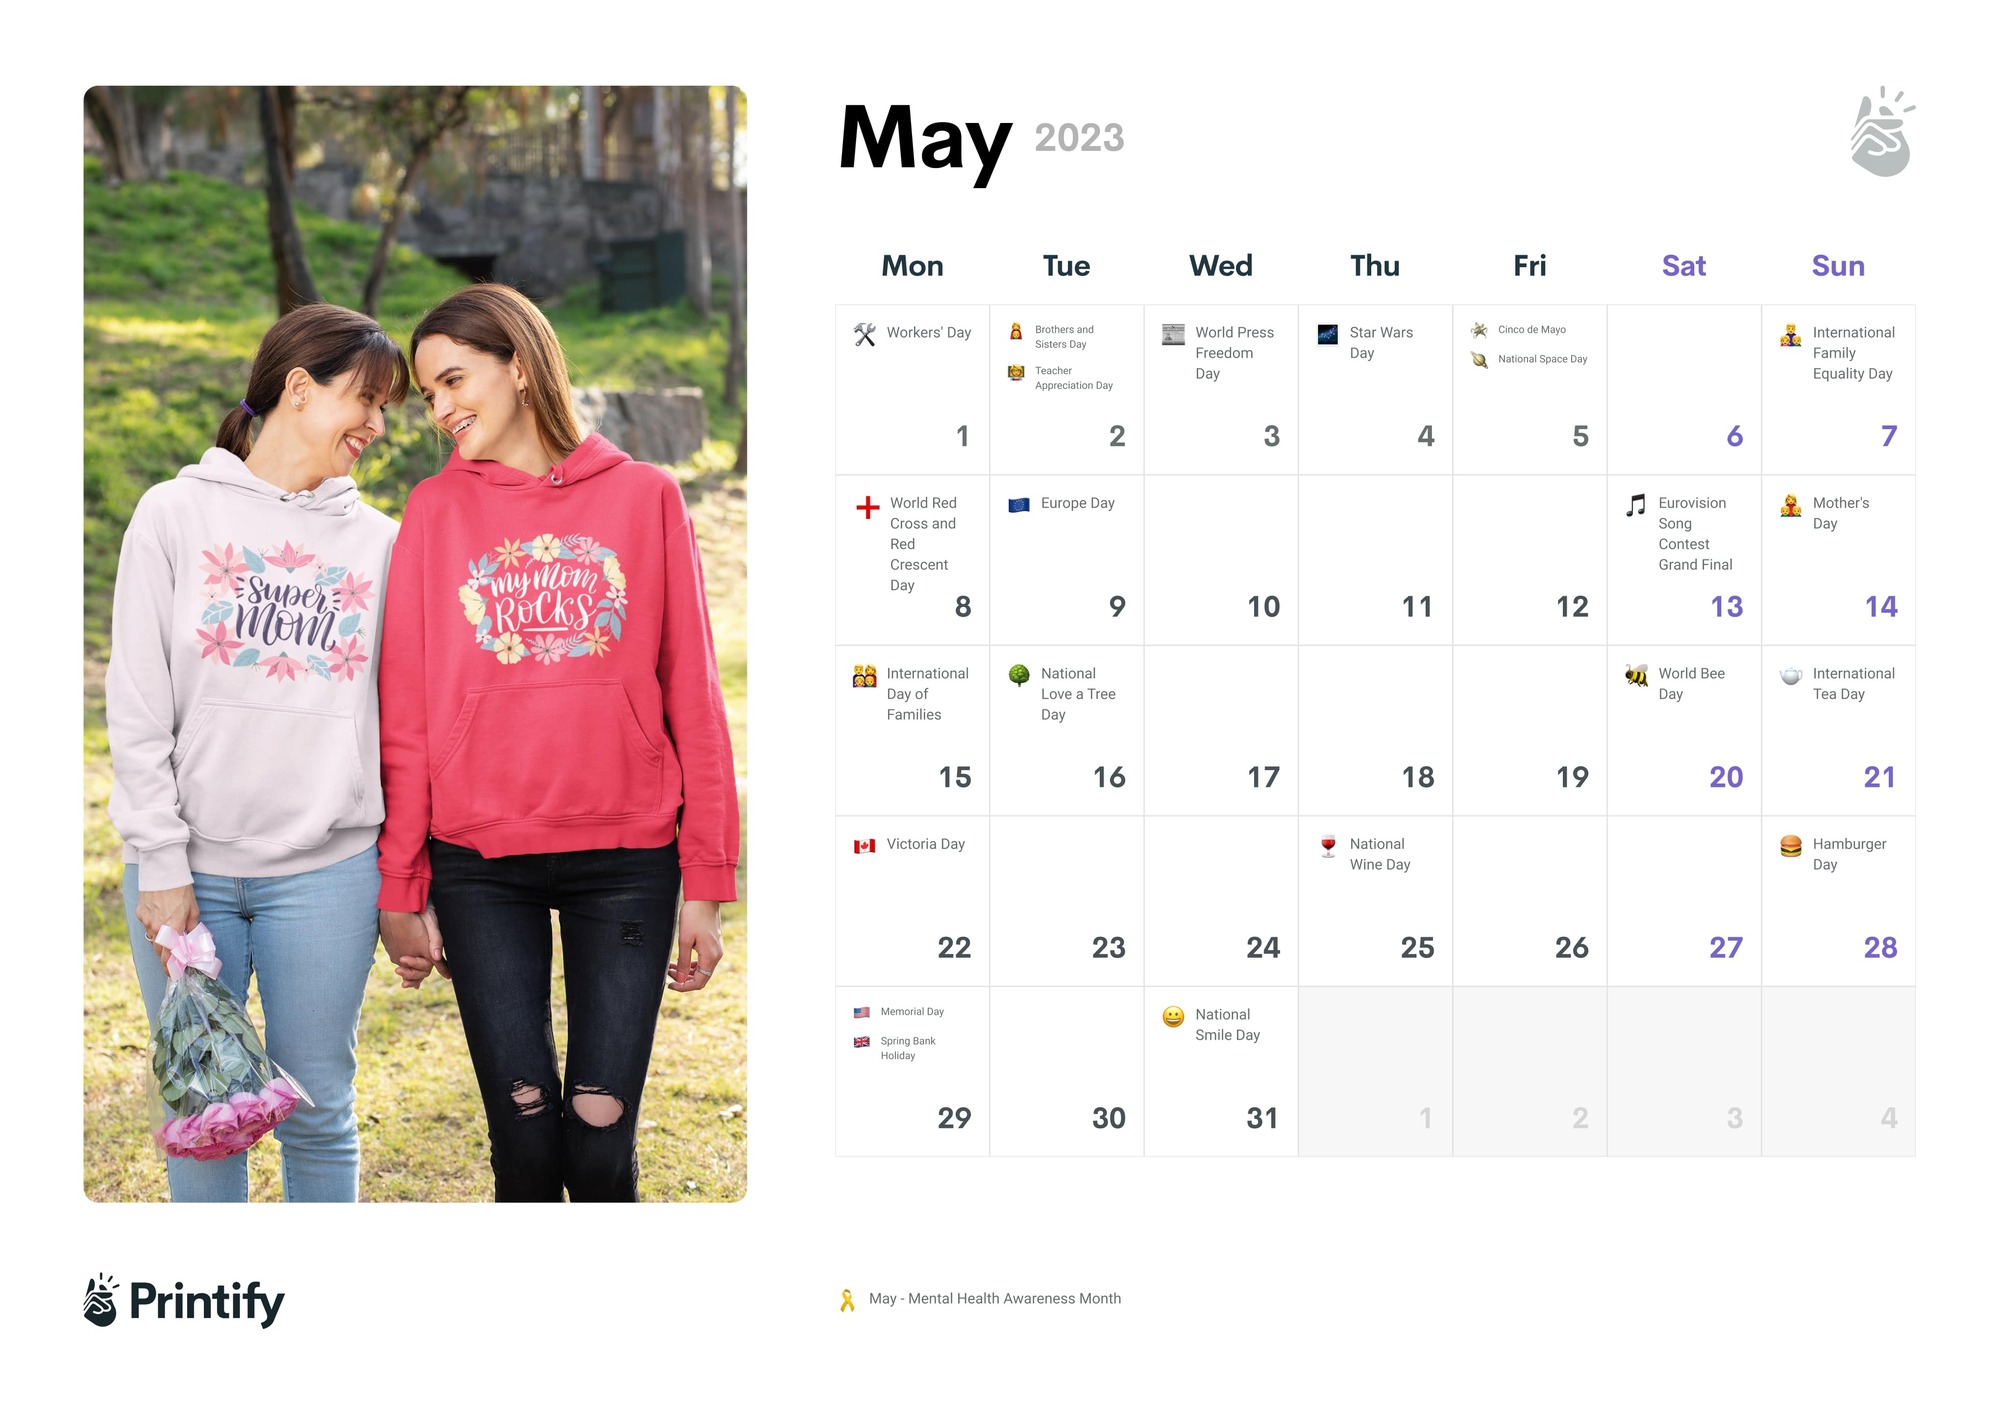 Marketing Calendar 2022 - May